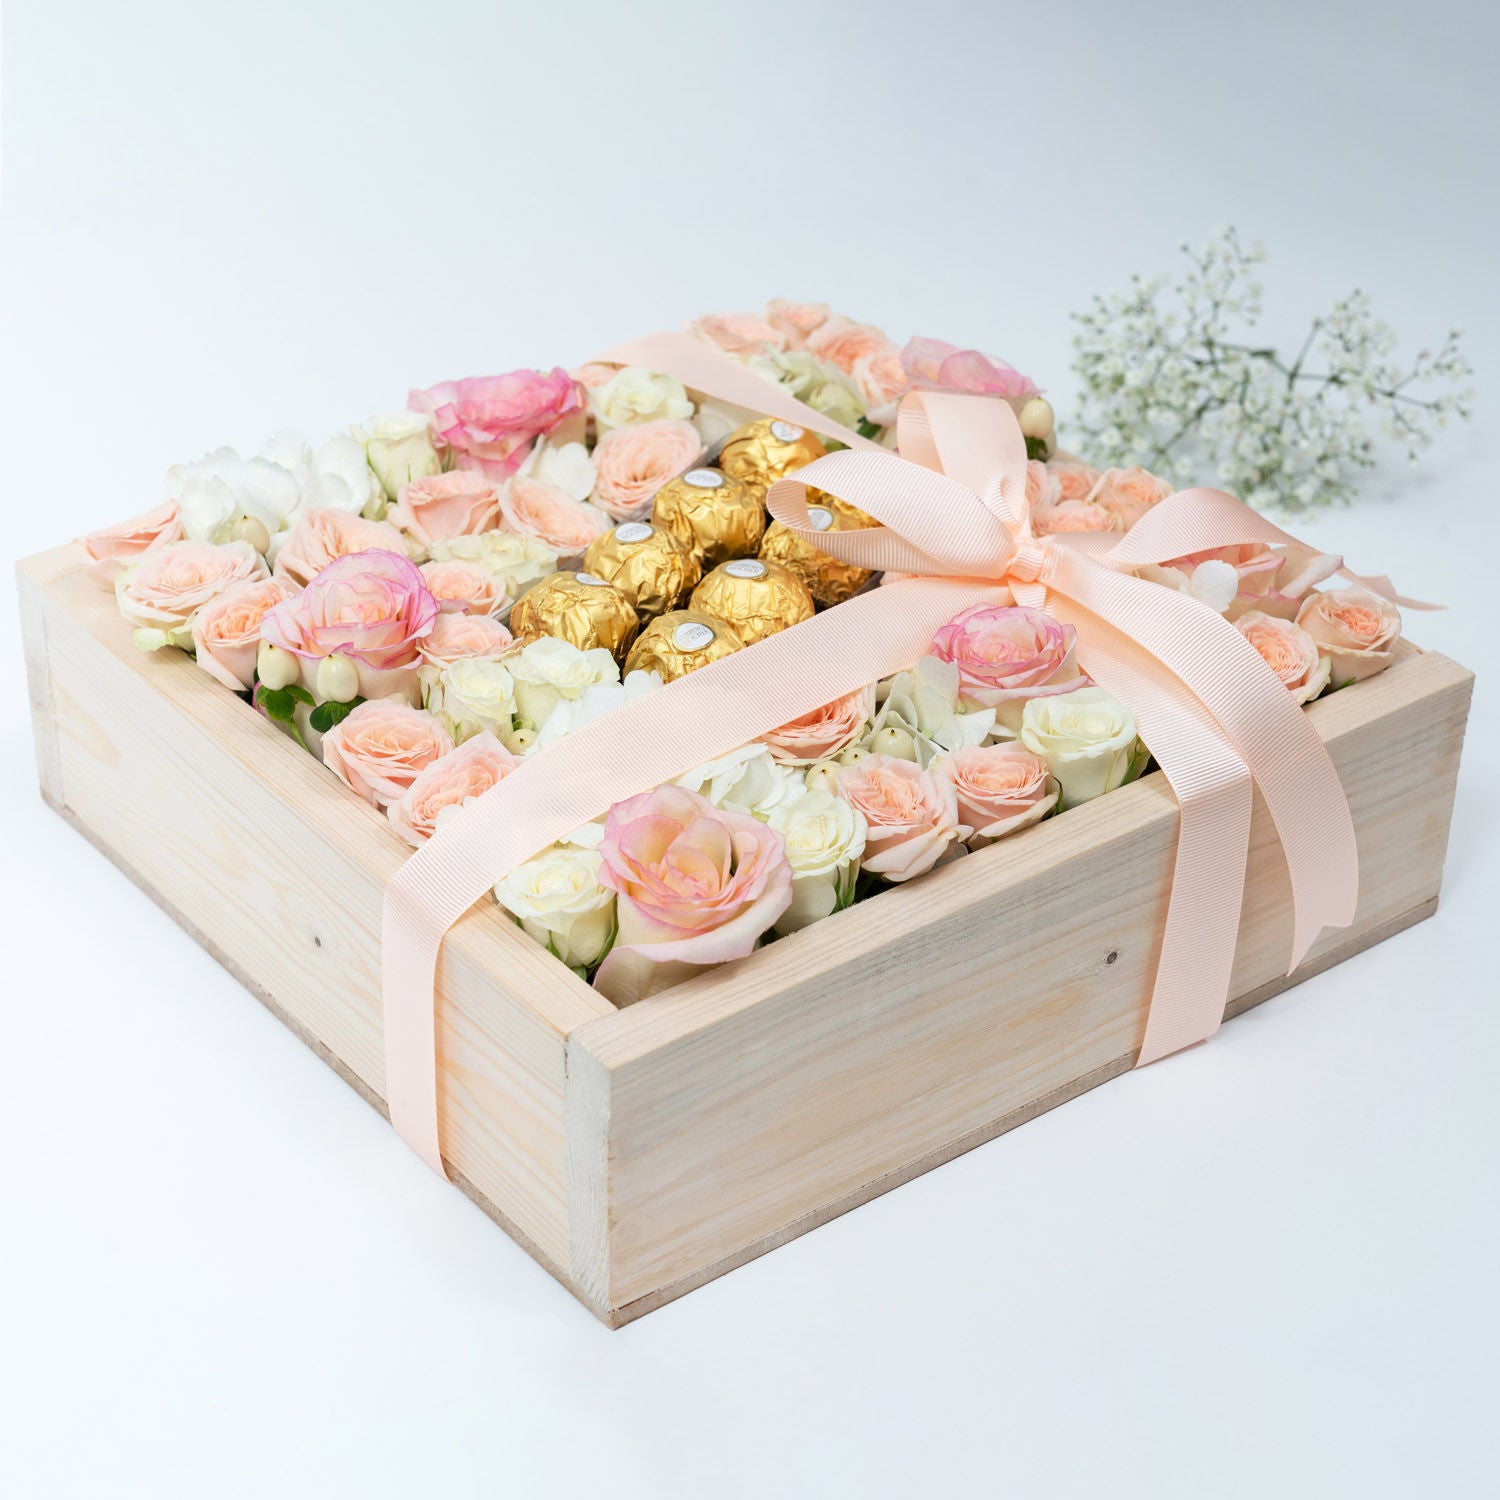 Flowers & Chocolates Wraped Gift Box